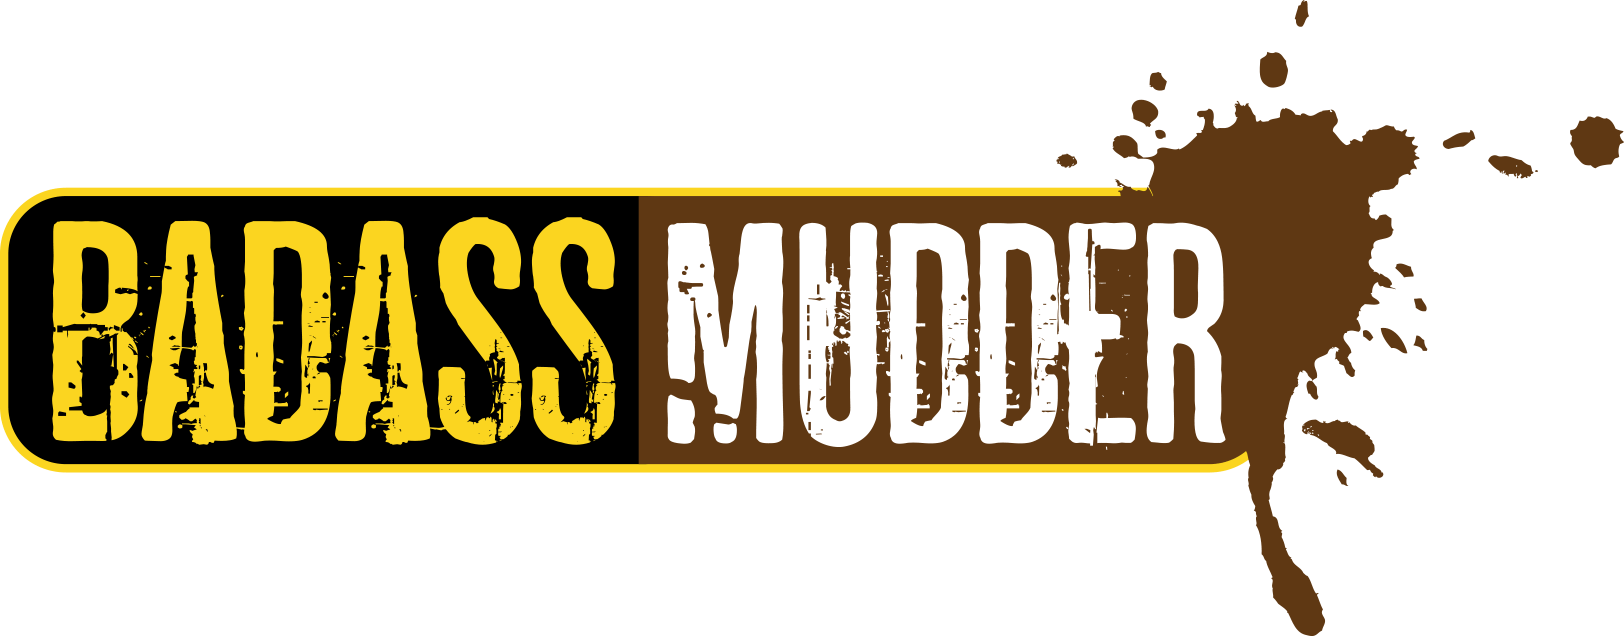 Mudders Logo - Badass Mudder Event Photo